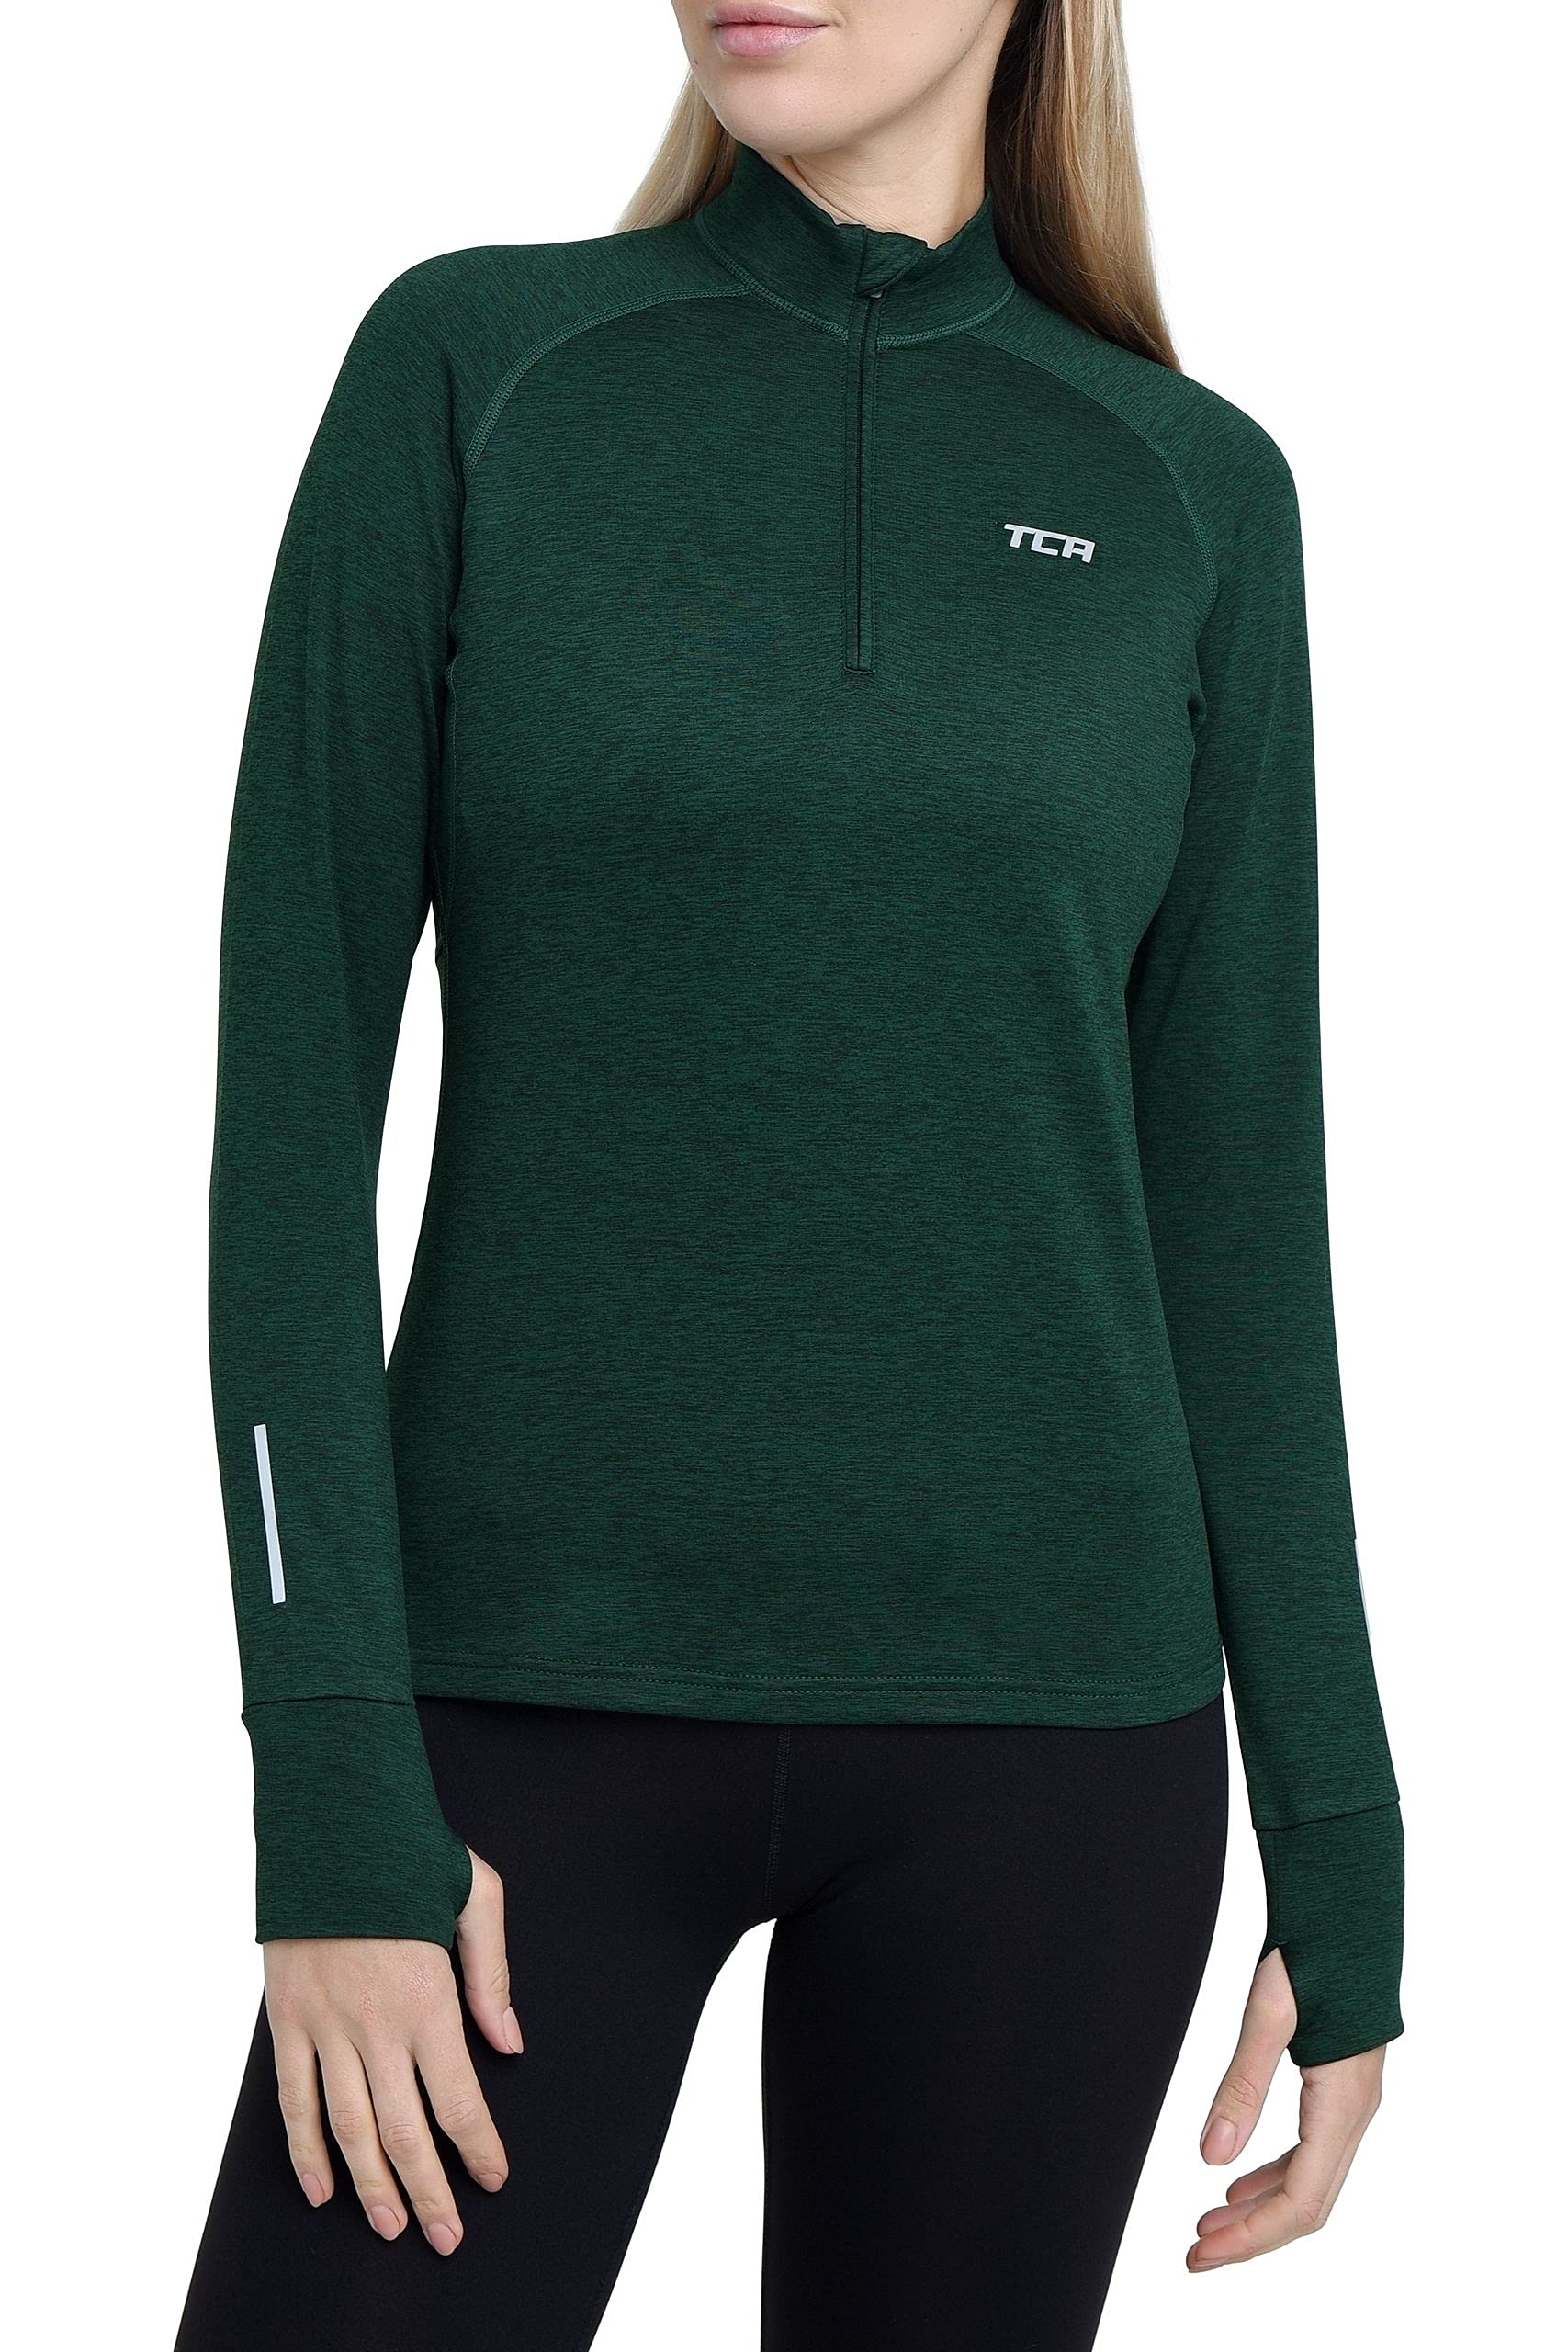 TCA Damen Winter Running Langarm Laufshirt mit Brustreißverschluss - Grün, M